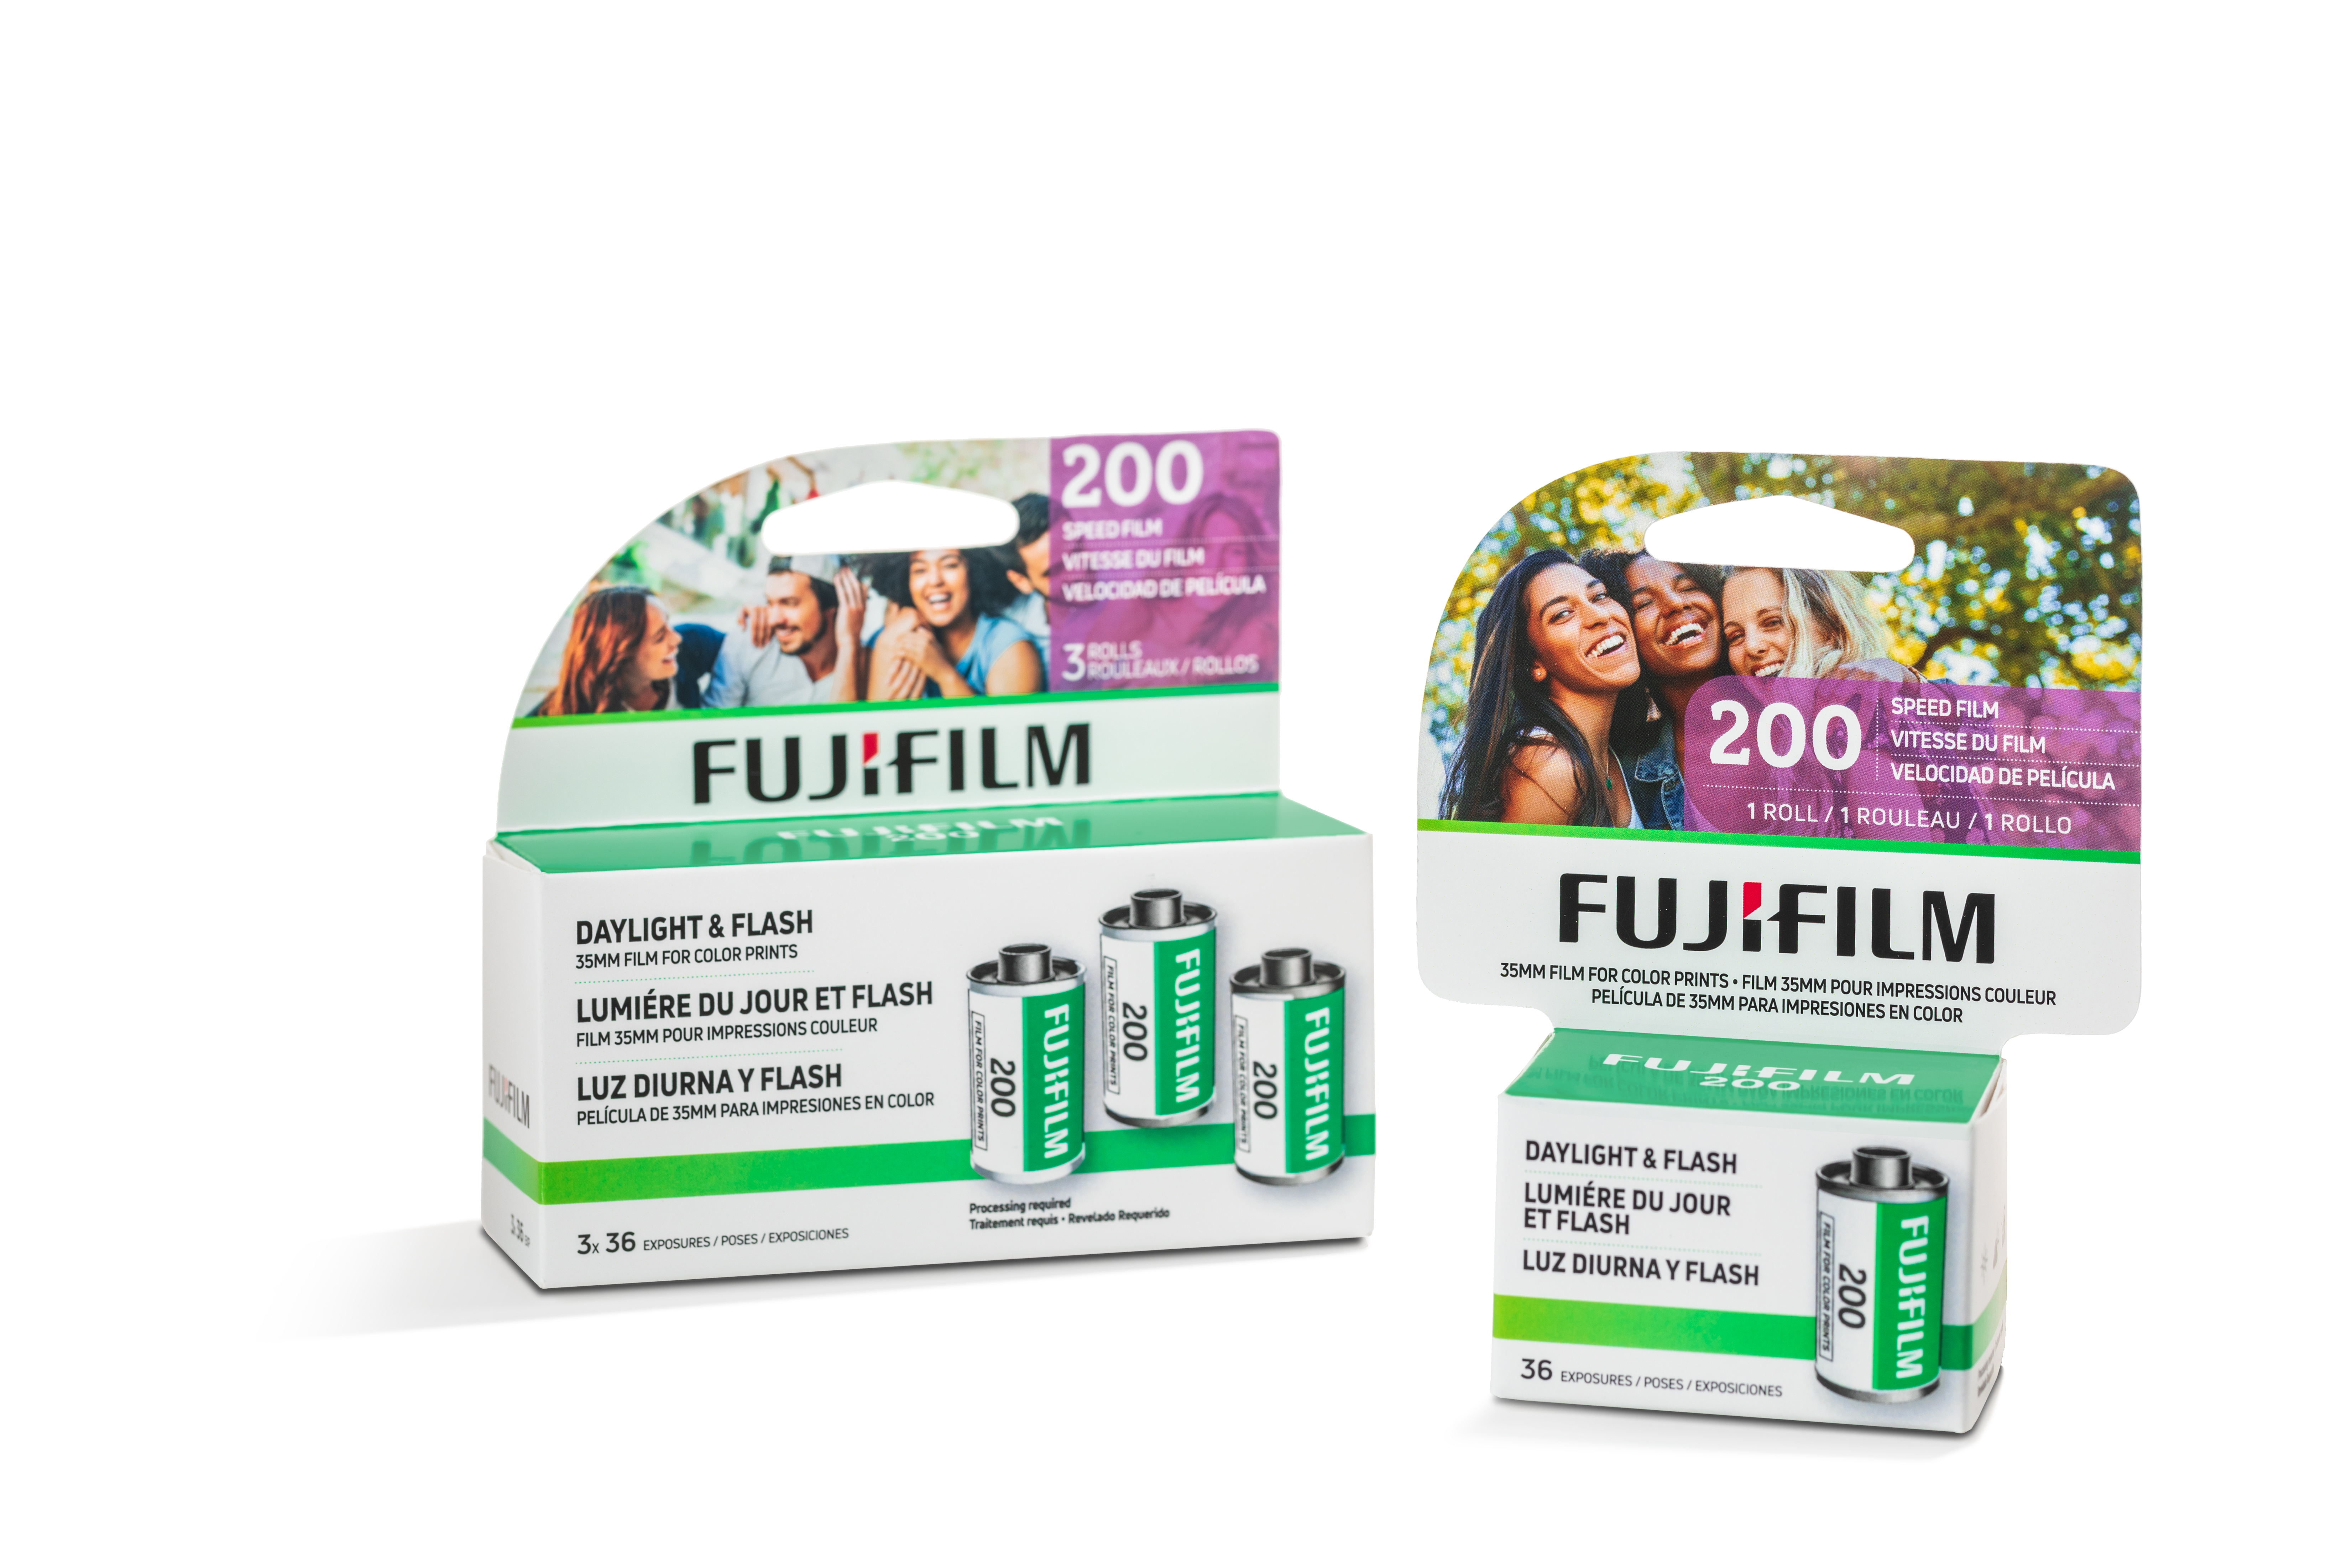 The New Fujifilm ISO 200 Film Is Causing a Stir